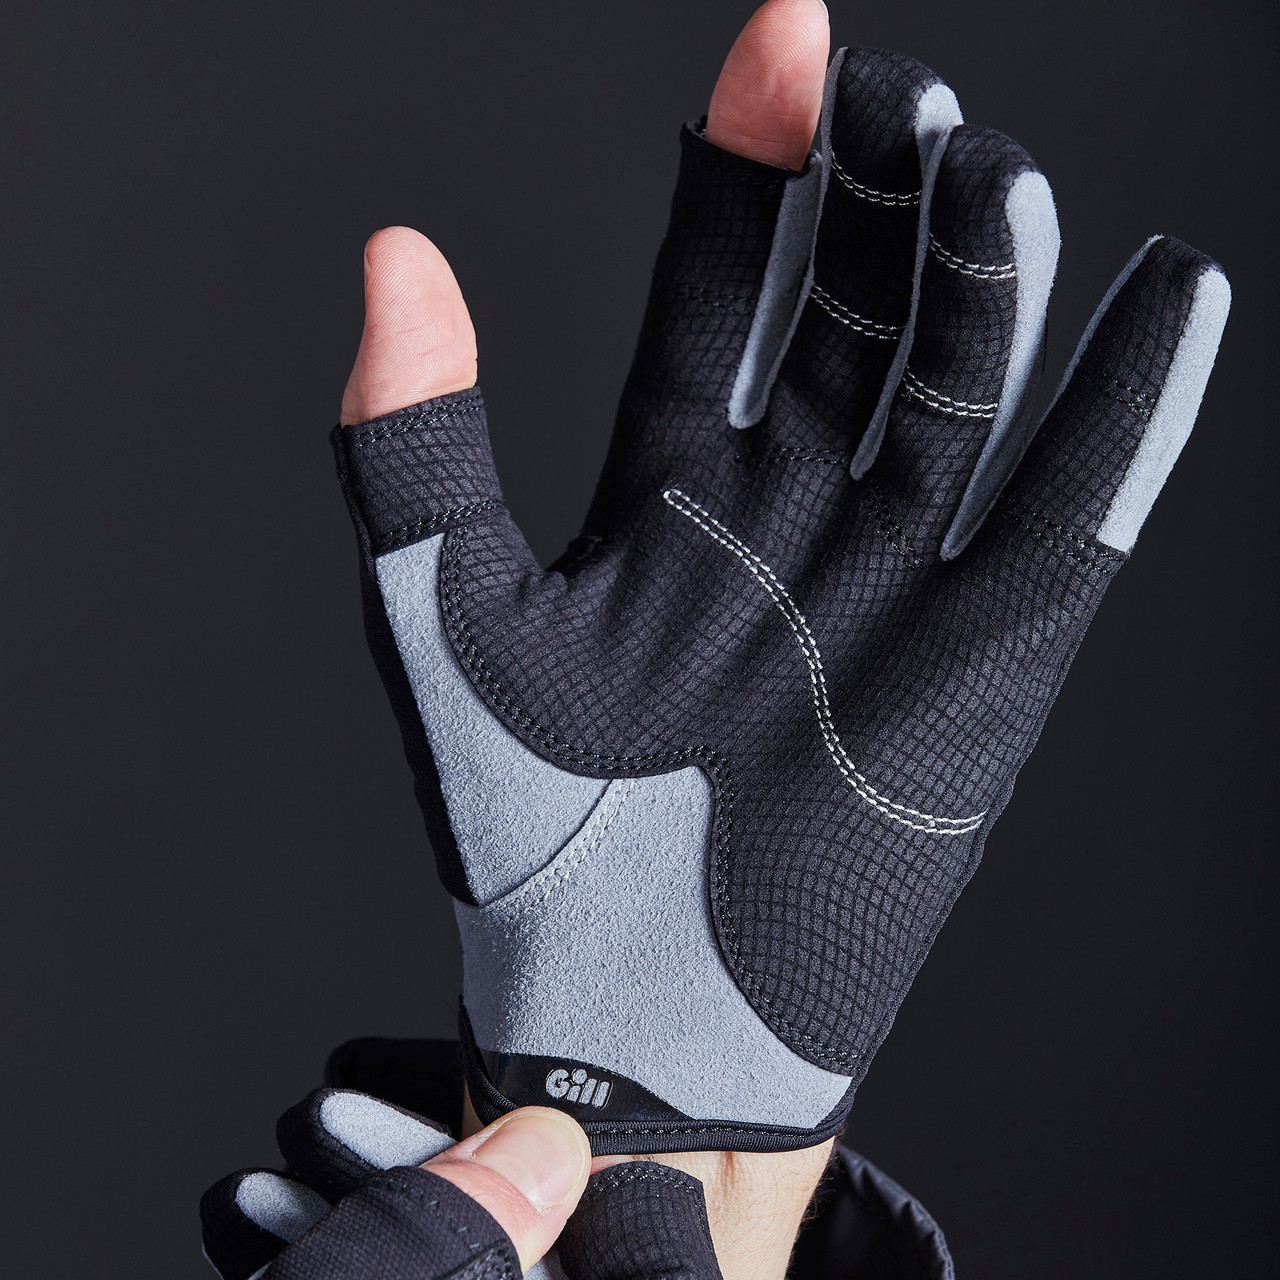 Gill Championship Gloves - Short Finger with 3/4 Length Fingers